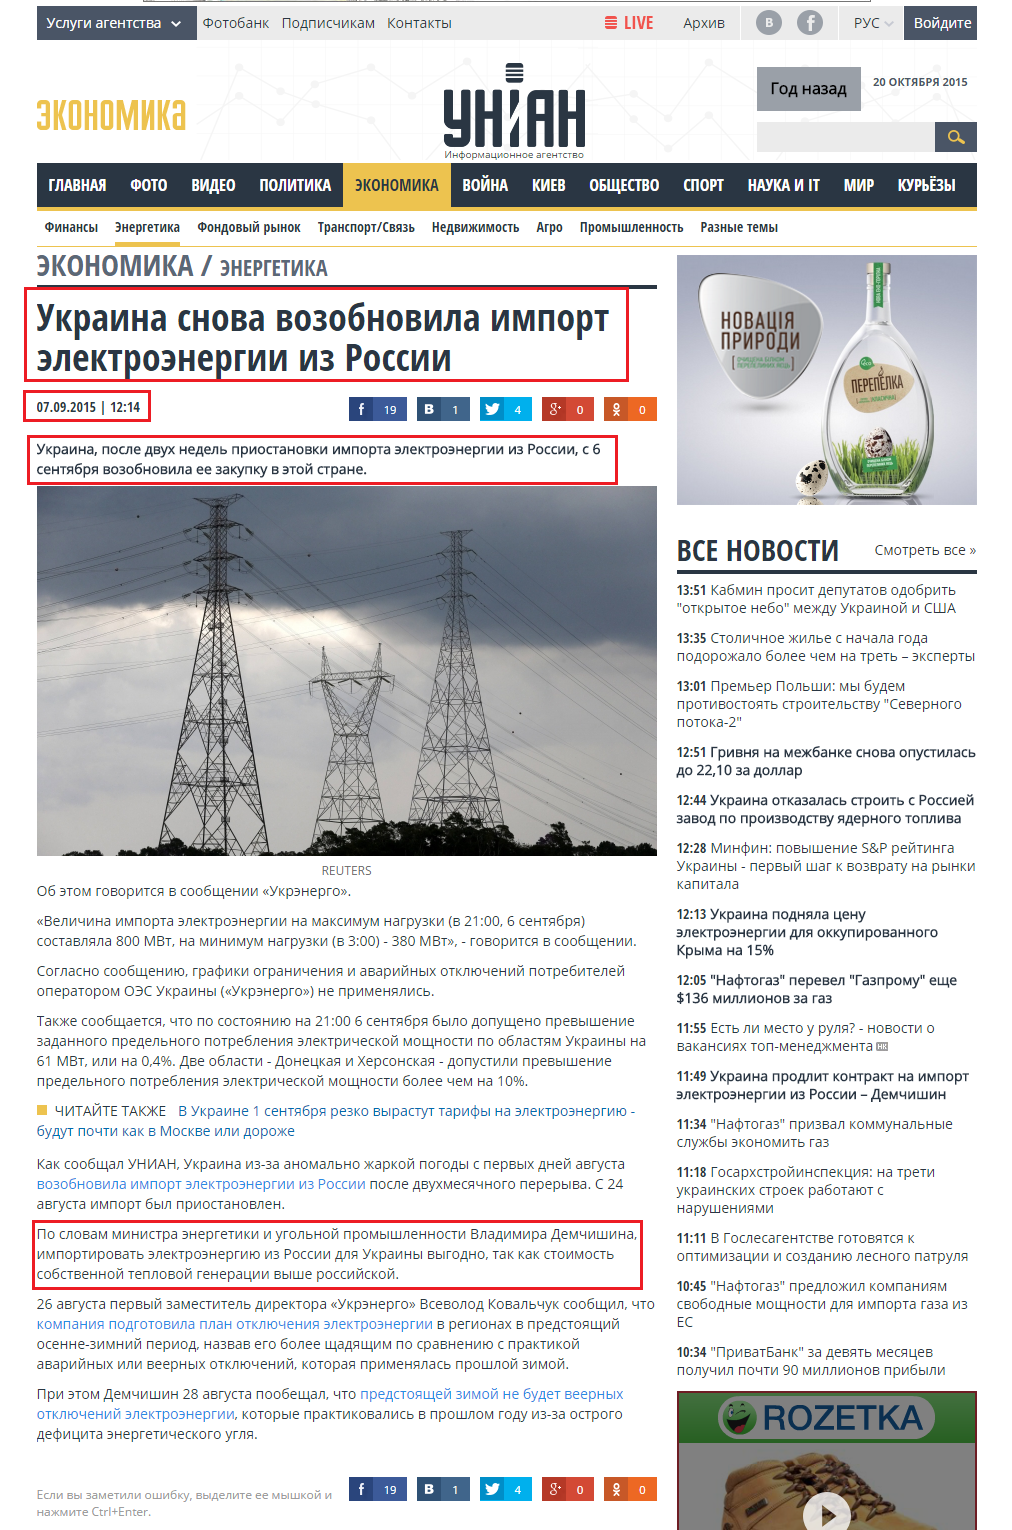 http://economics.unian.net/energetics/1119467-ukraina-snova-vozobnovila-import-elektroenergii-iz-rossii.html